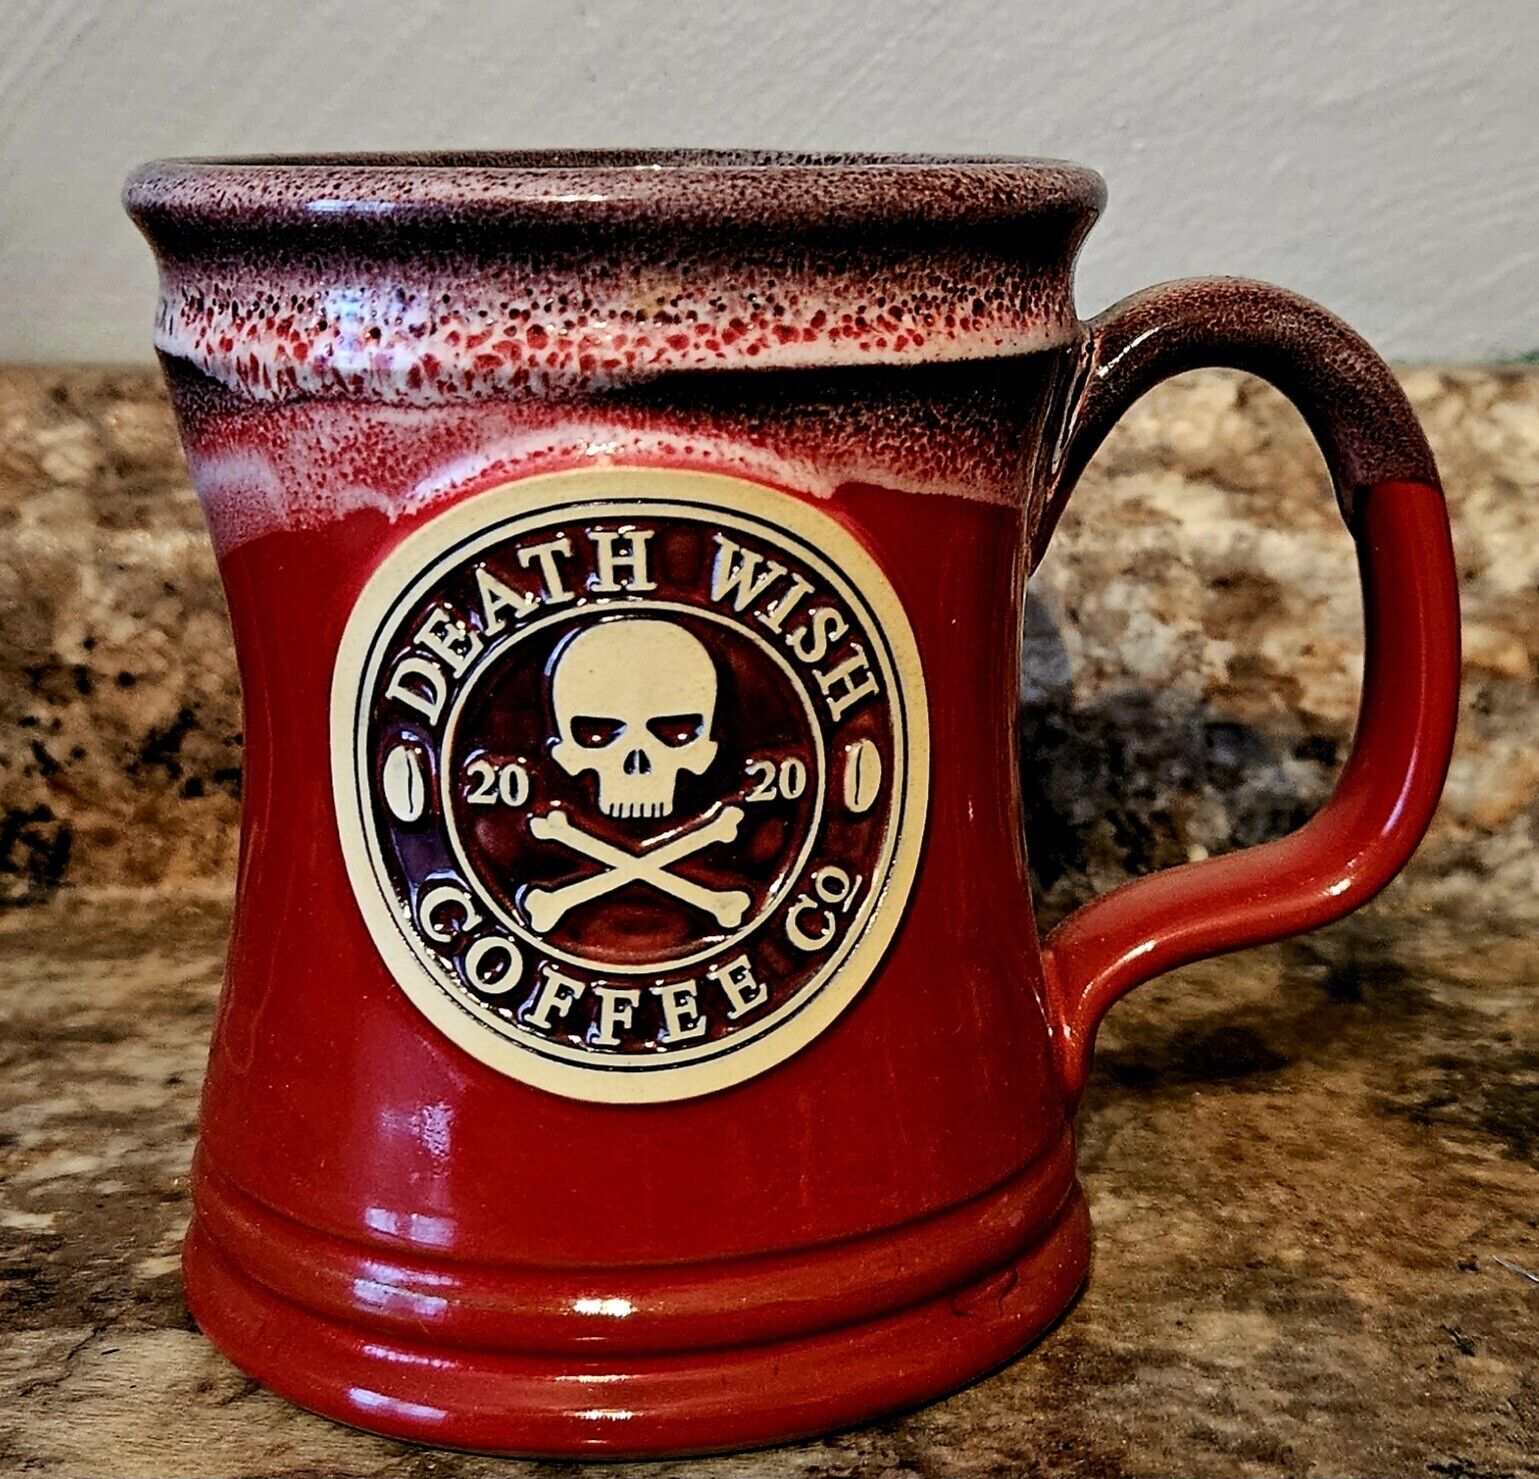 Death Wish Coffee Employee Relentless Mug  2020